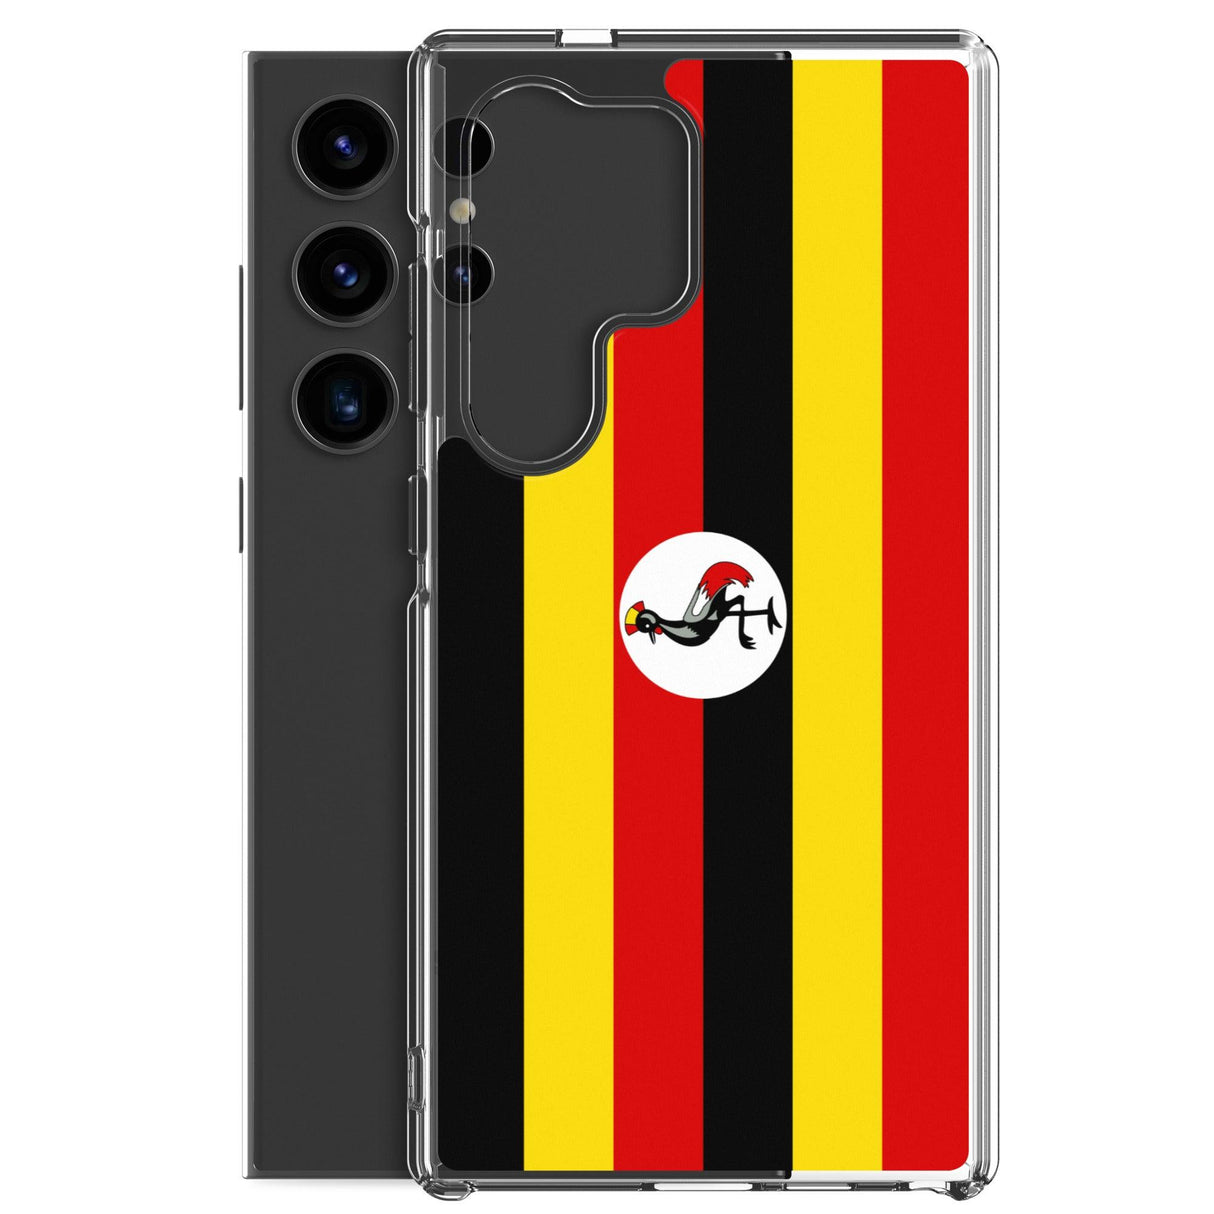 Coque Téléphone Drapeau de l'Ouganda - Pixelforma 